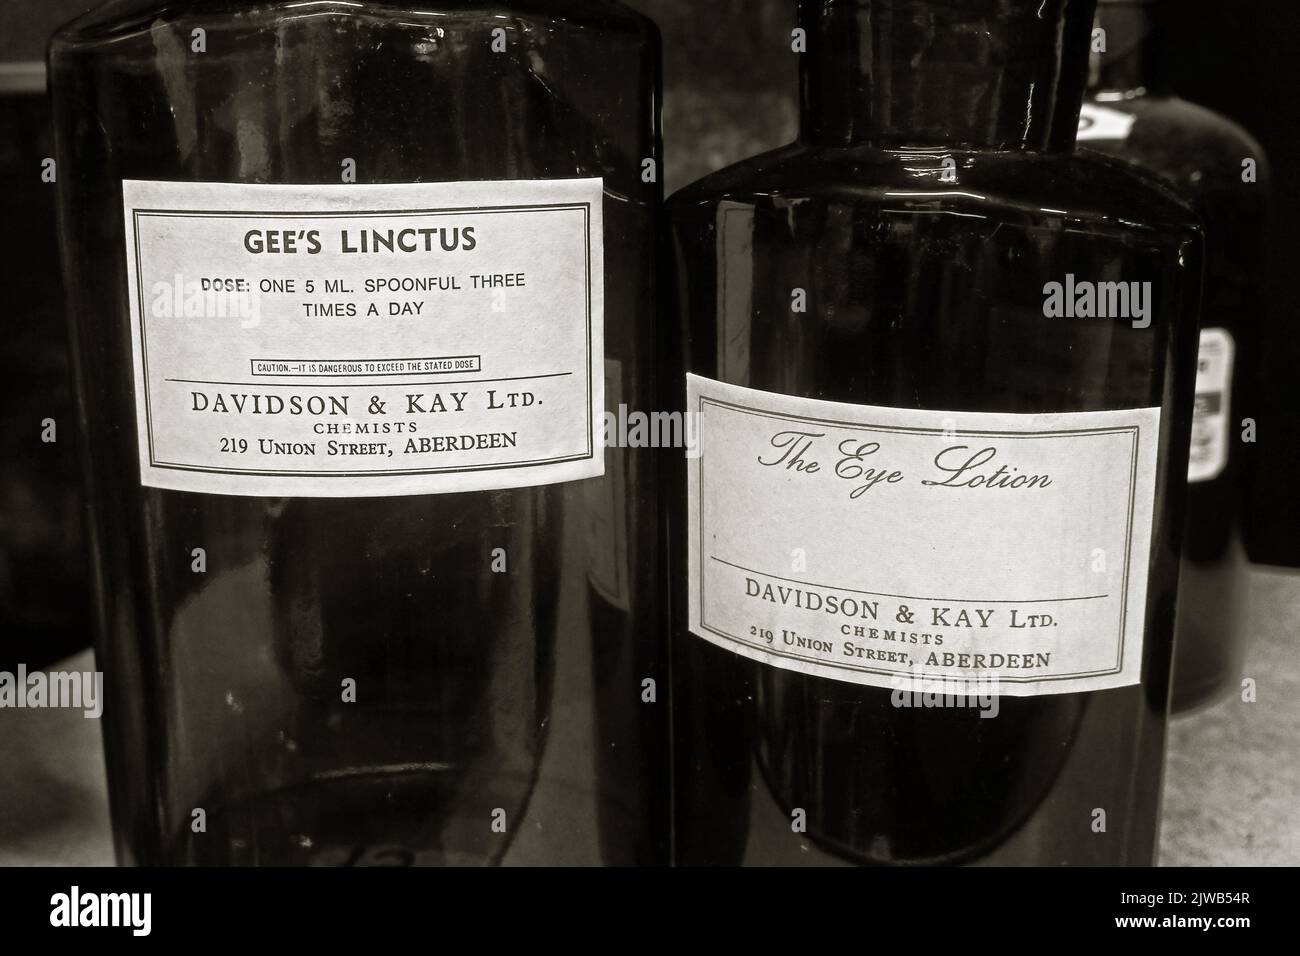 Gee's Linctus & The Eye Lotion - preparato da Davidson & Kay, Chemists of 219 Union Street, Aberdeen, Aberdeenshire, Scotland, UK, AB10 1TL Foto Stock